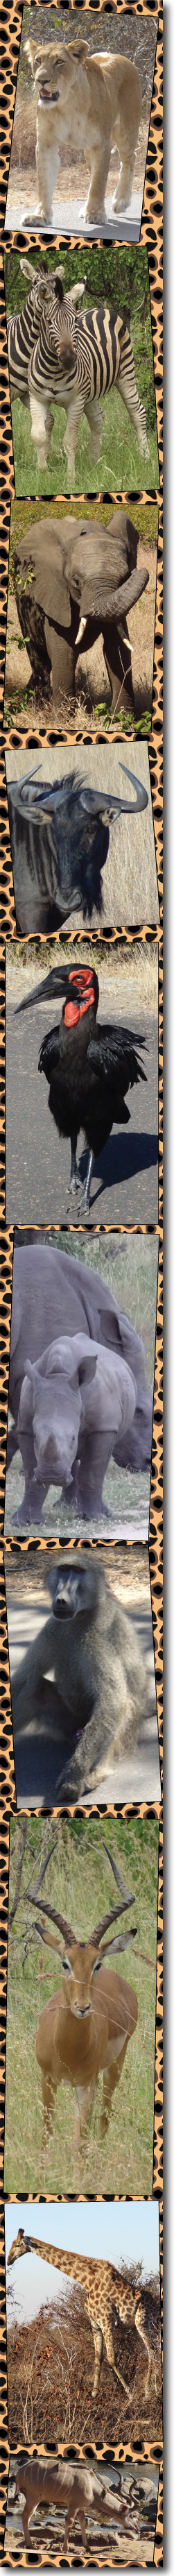 Kruger safaris